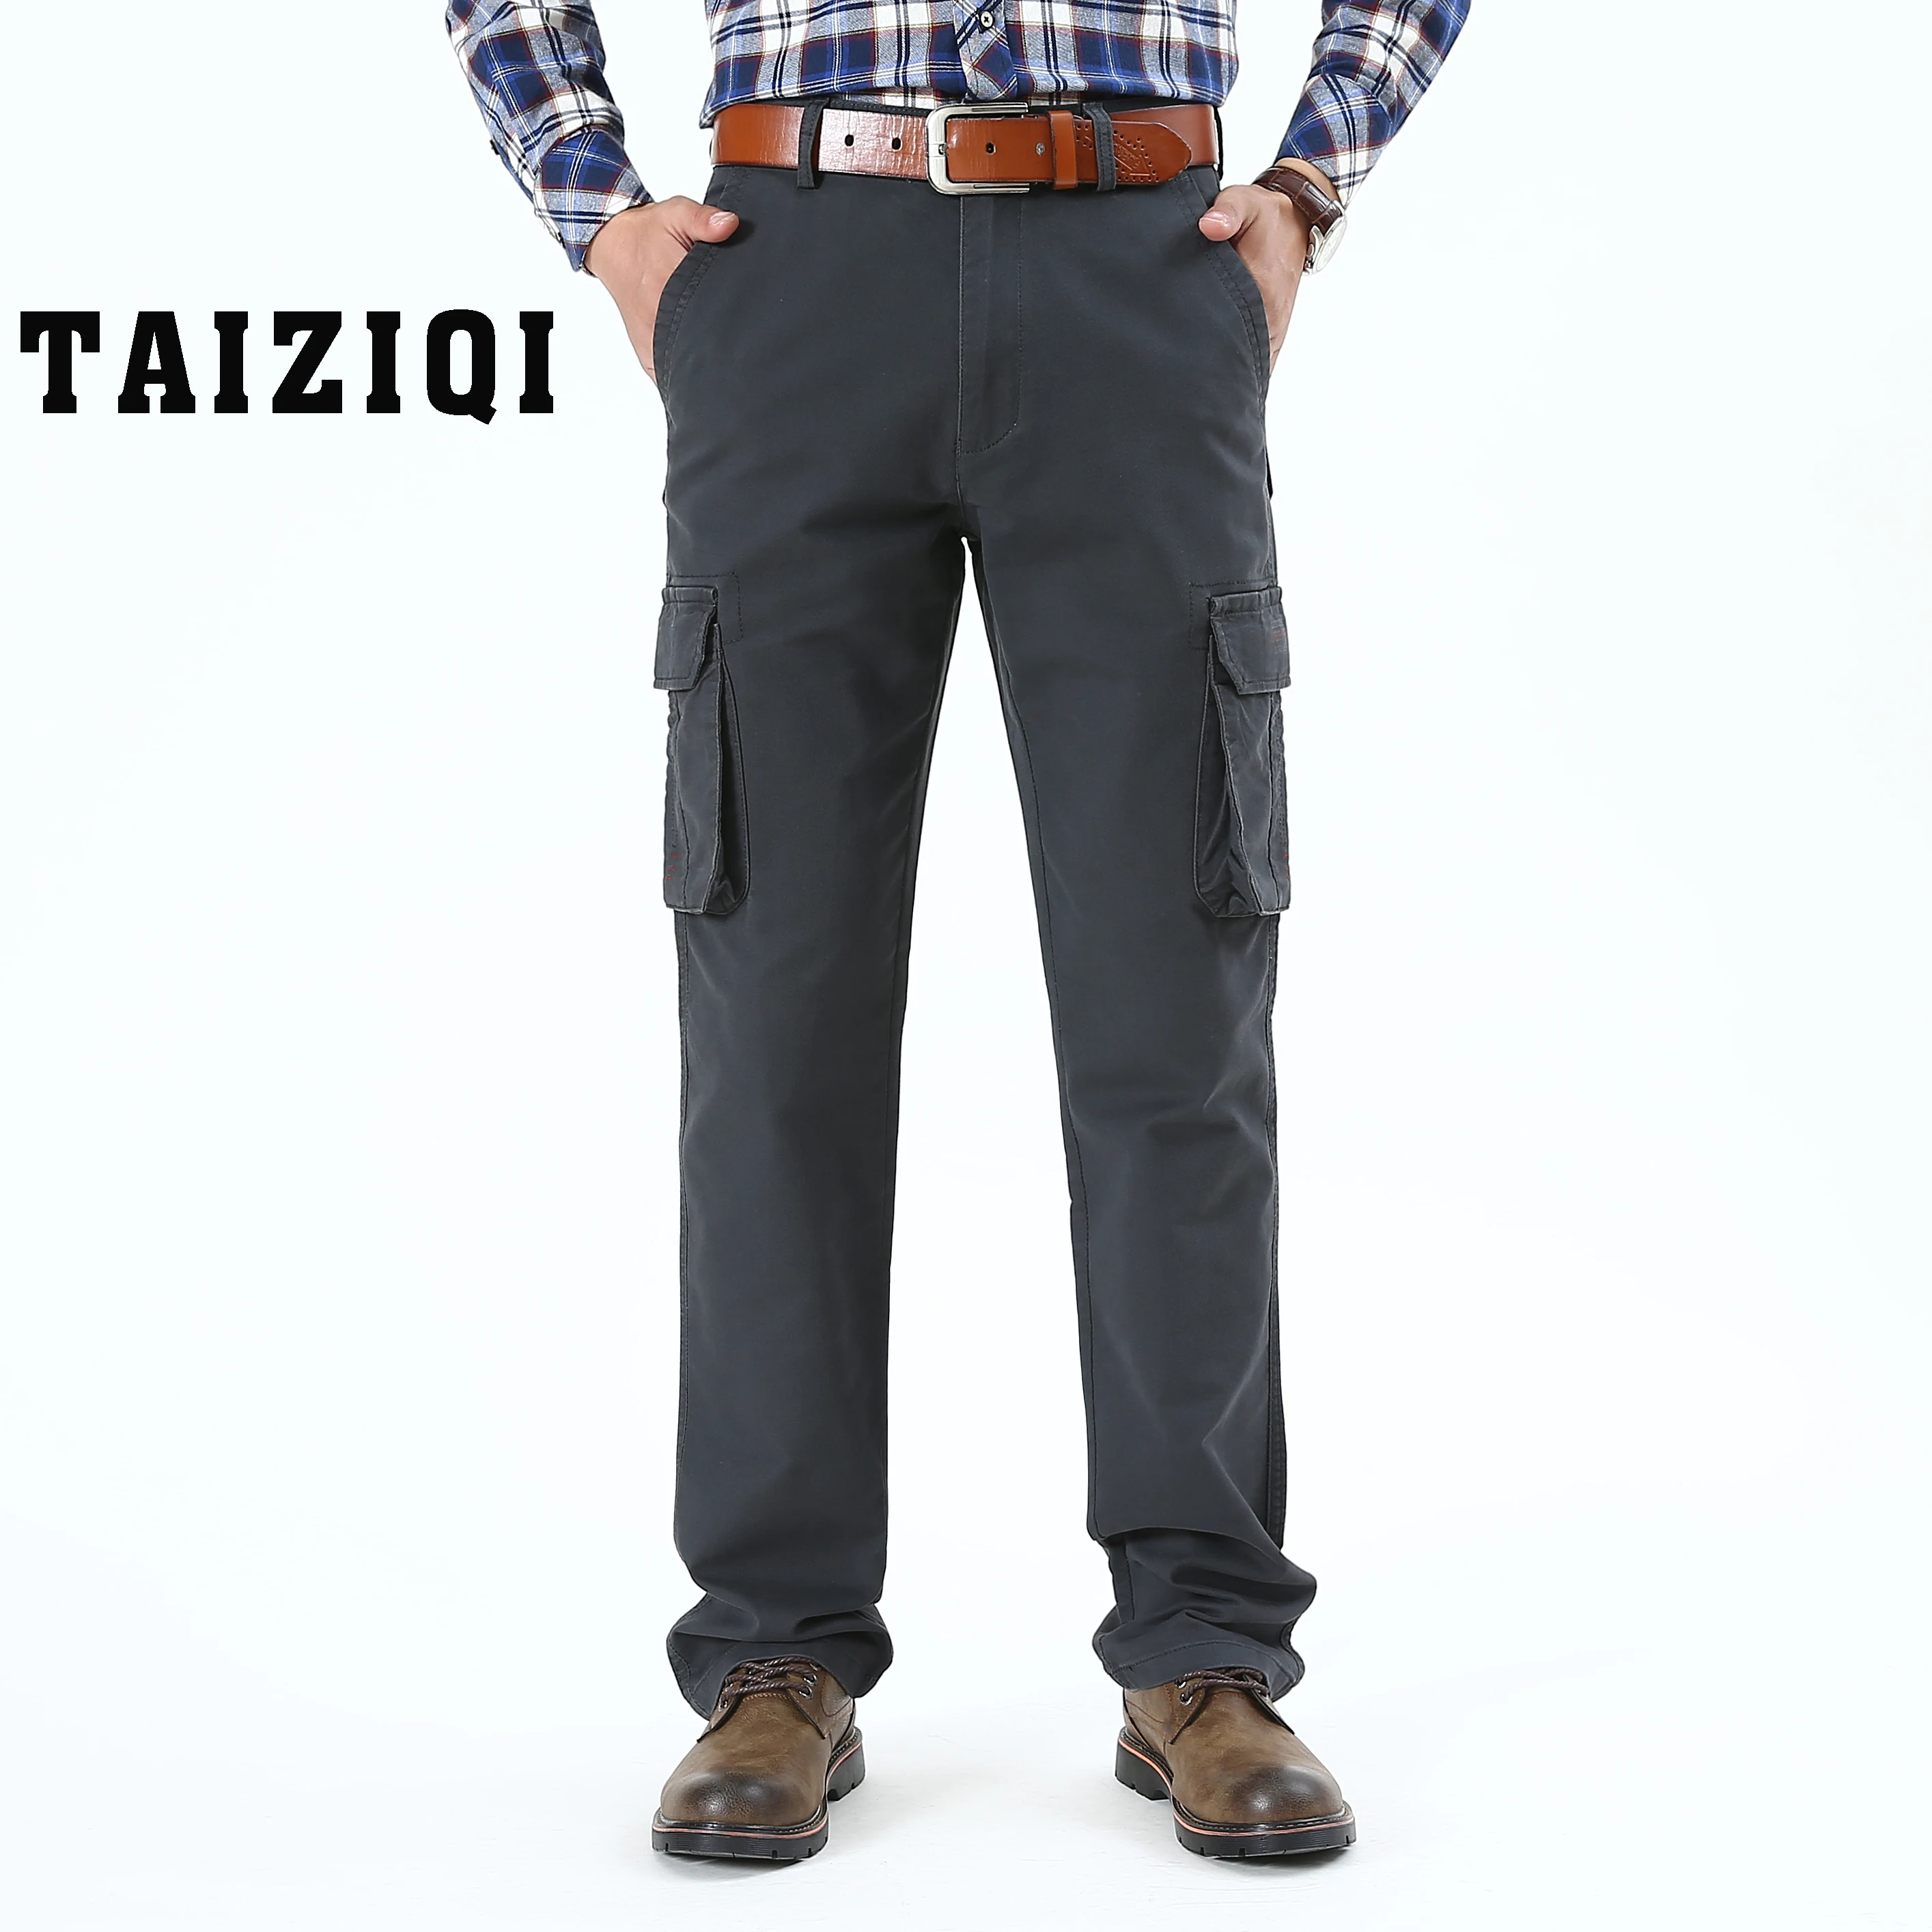 

TAIZIQI Tactical Pants Autumn Winter brand high quality Outdoor style Thick solid colour Trousers Men cargo pants men laiwei8M30